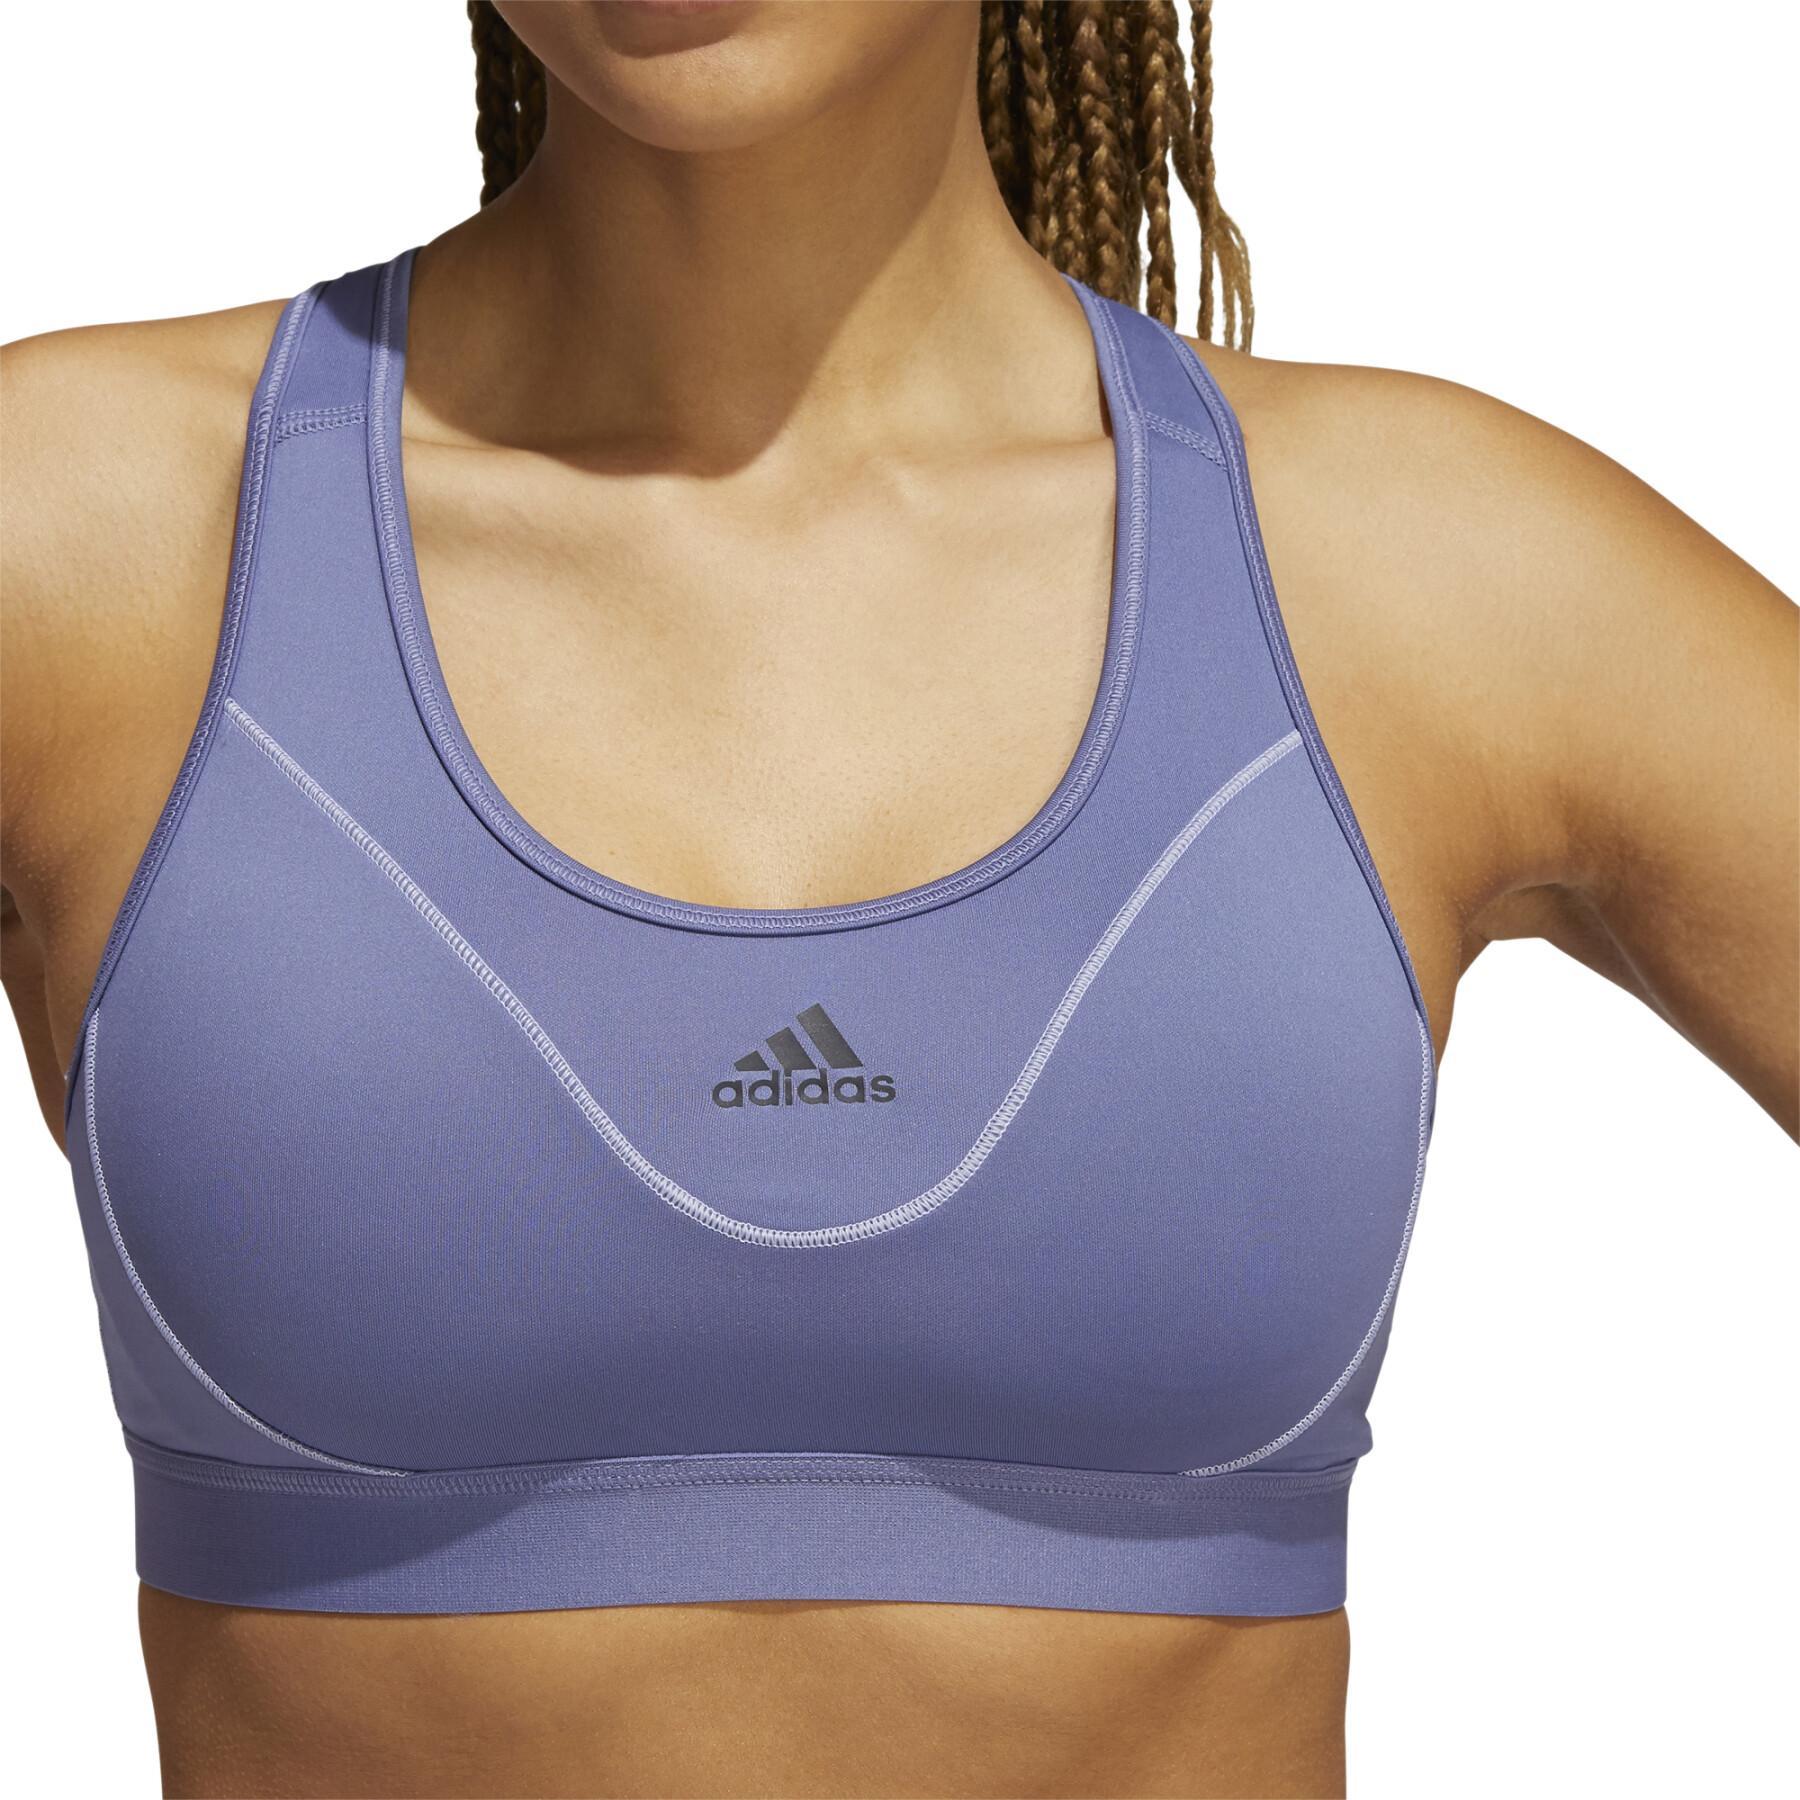 Women's bra adidas Believe This Medium-Support Reflective